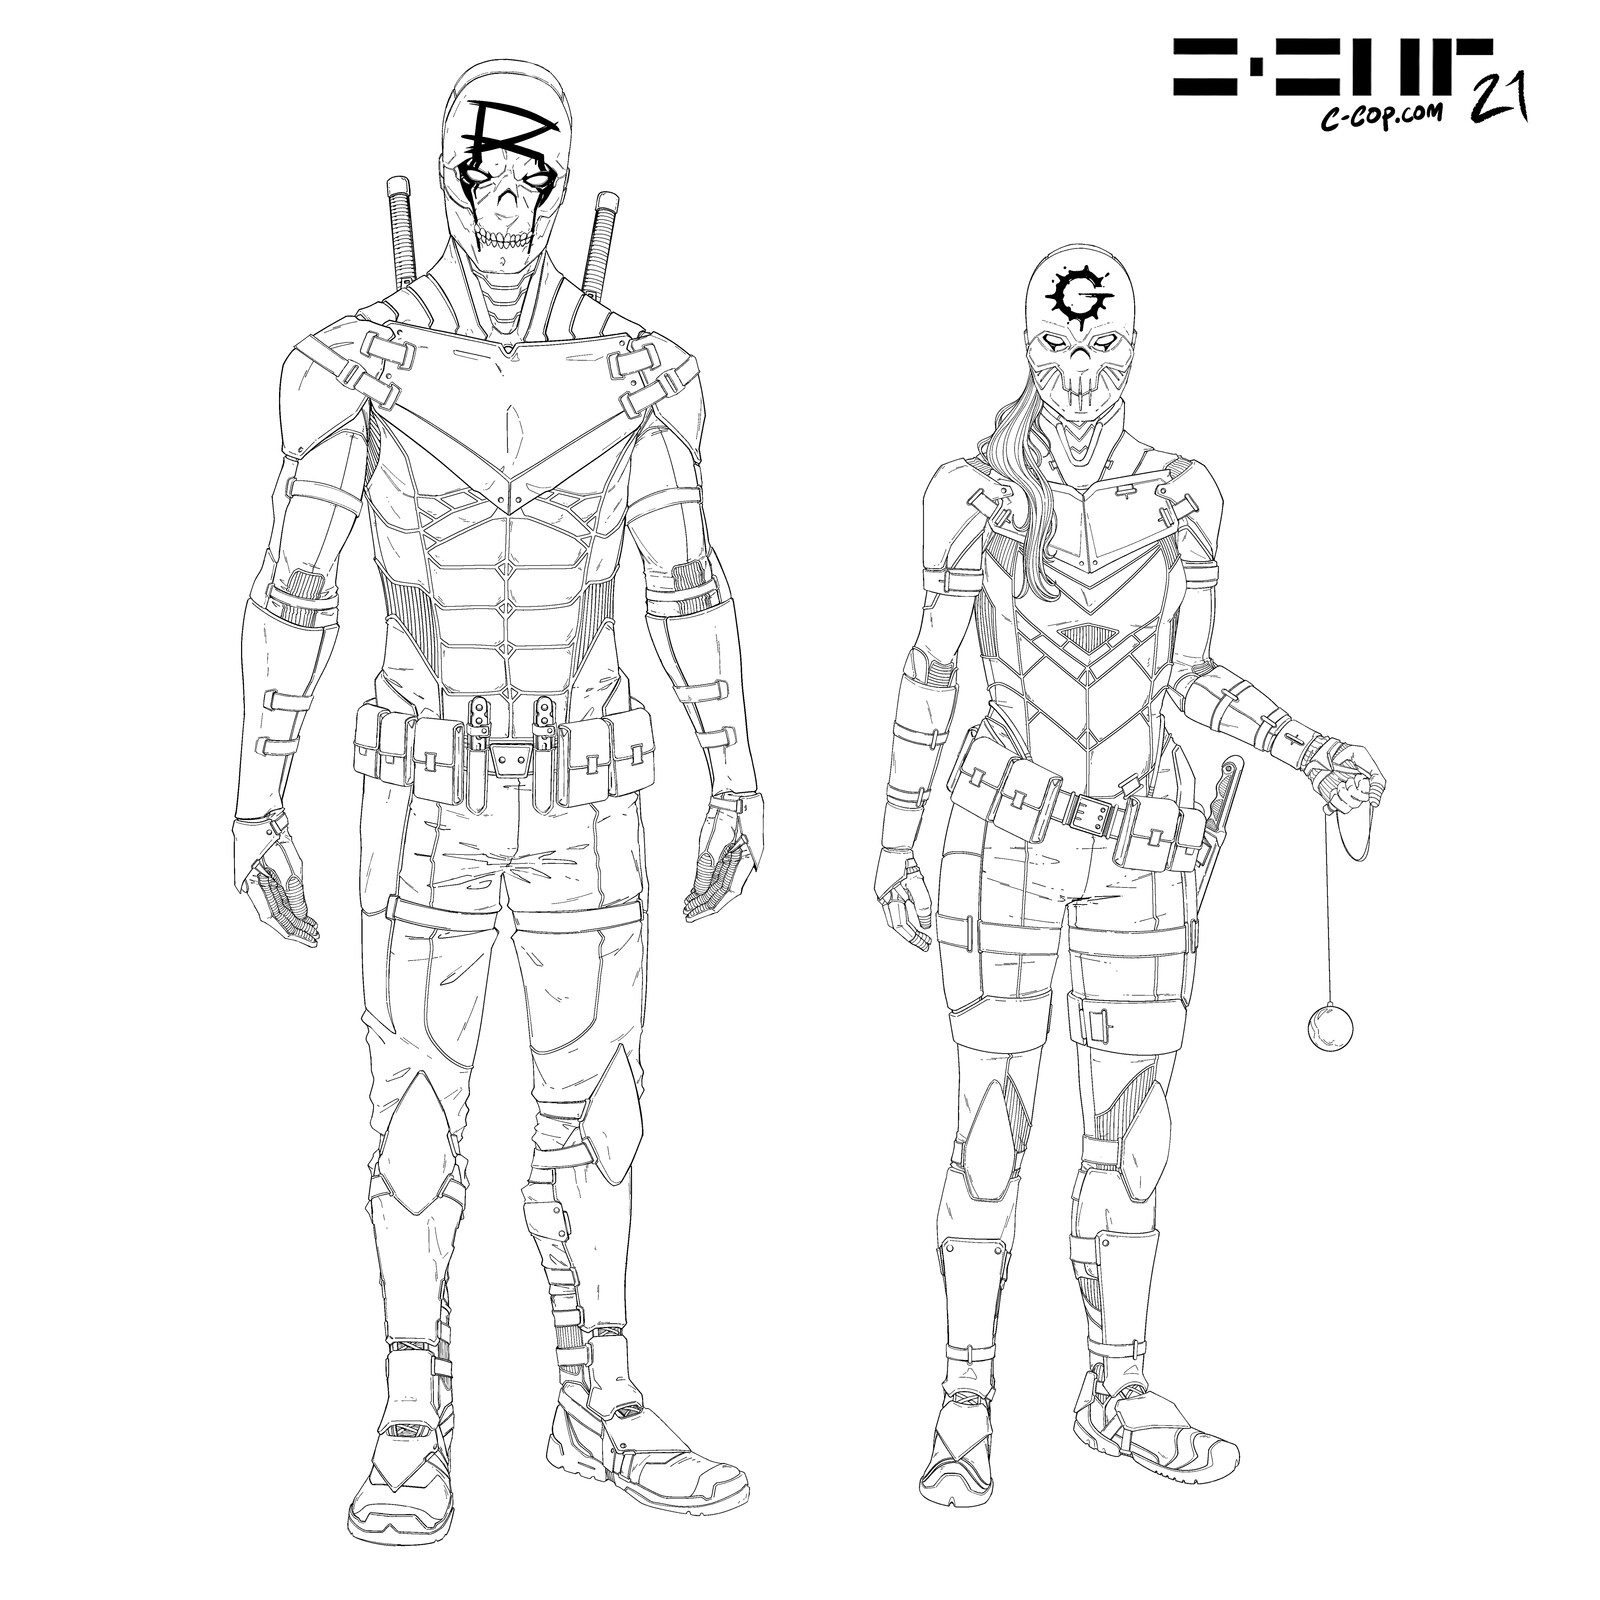 Reaper and Grim Costume Design (Line Art)